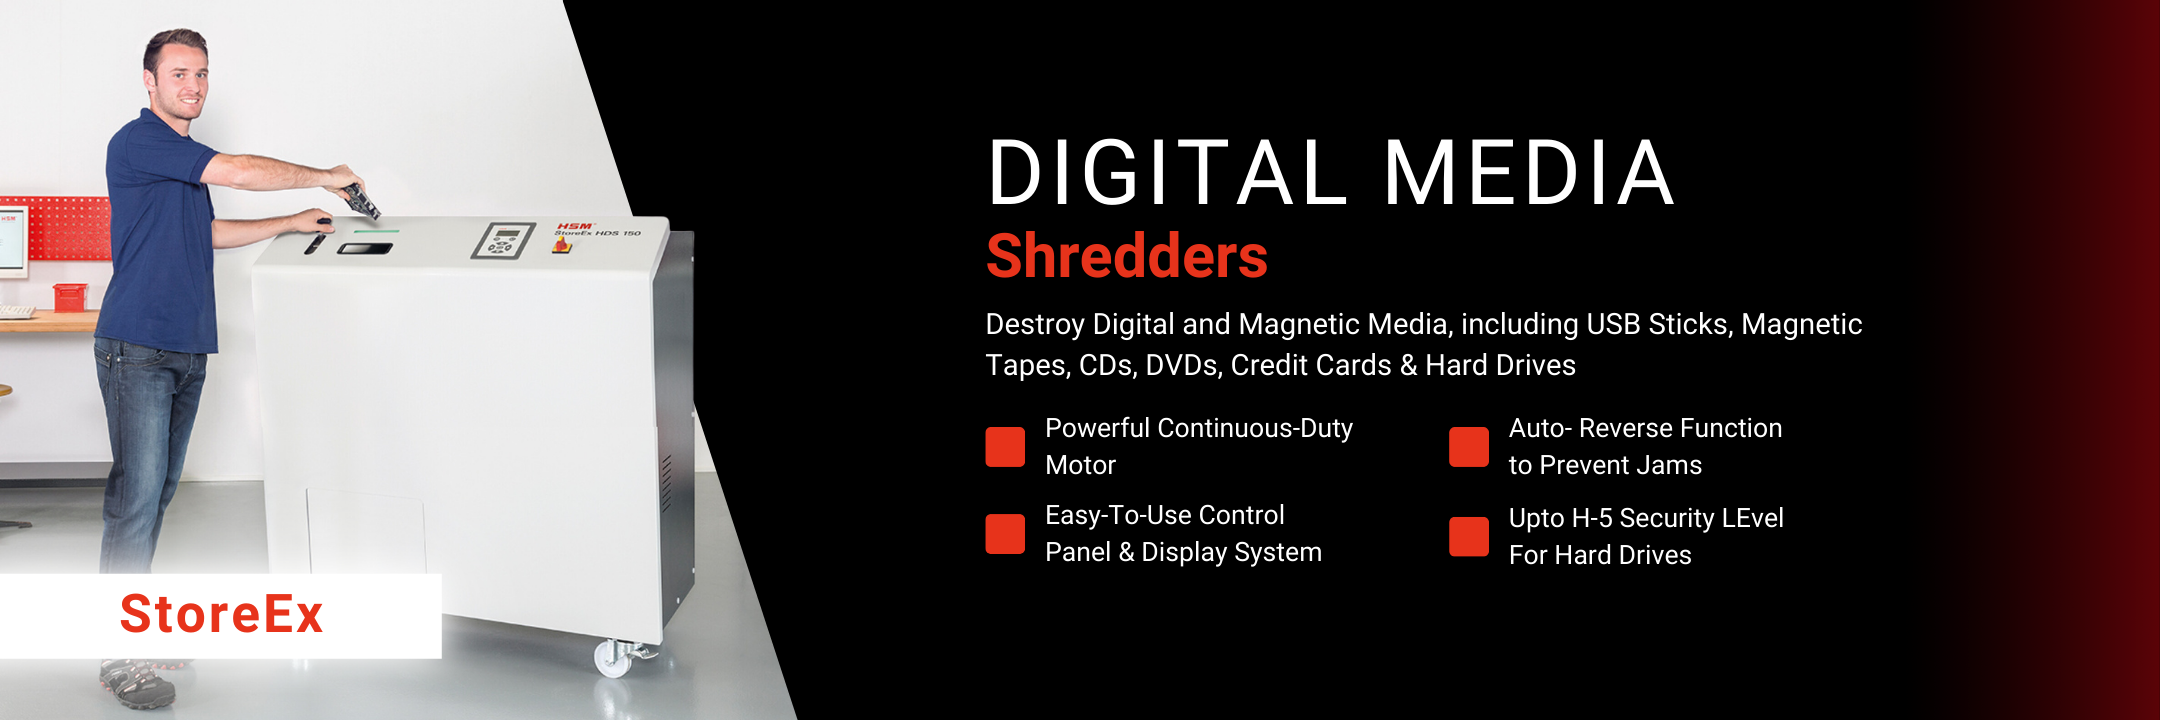 HSM-Digital-Media-Shredders-USA